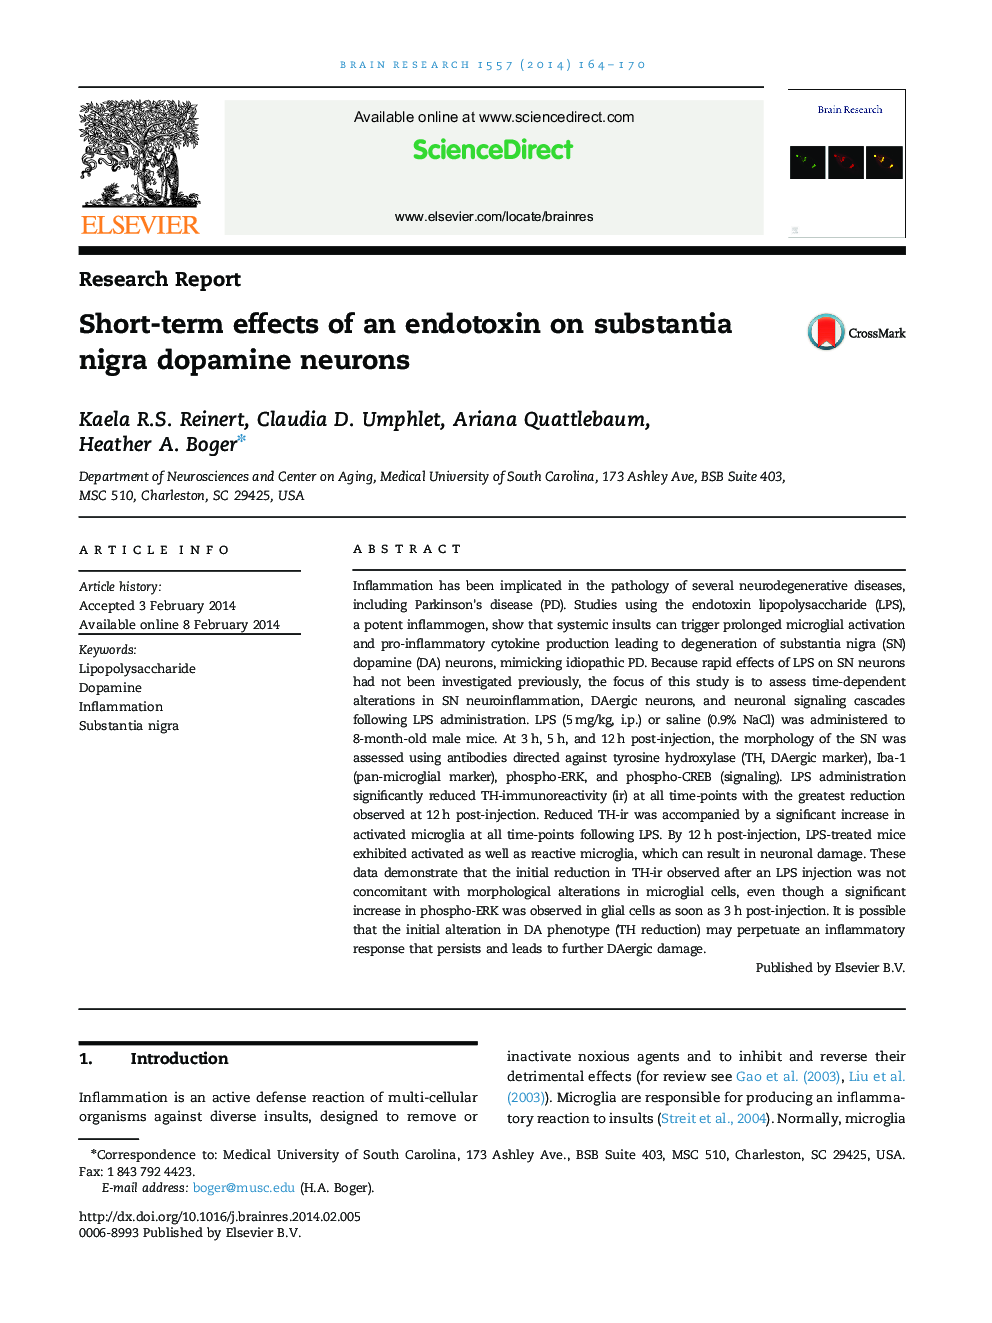 Short-term effects of an endotoxin on substantia nigra dopamine neurons